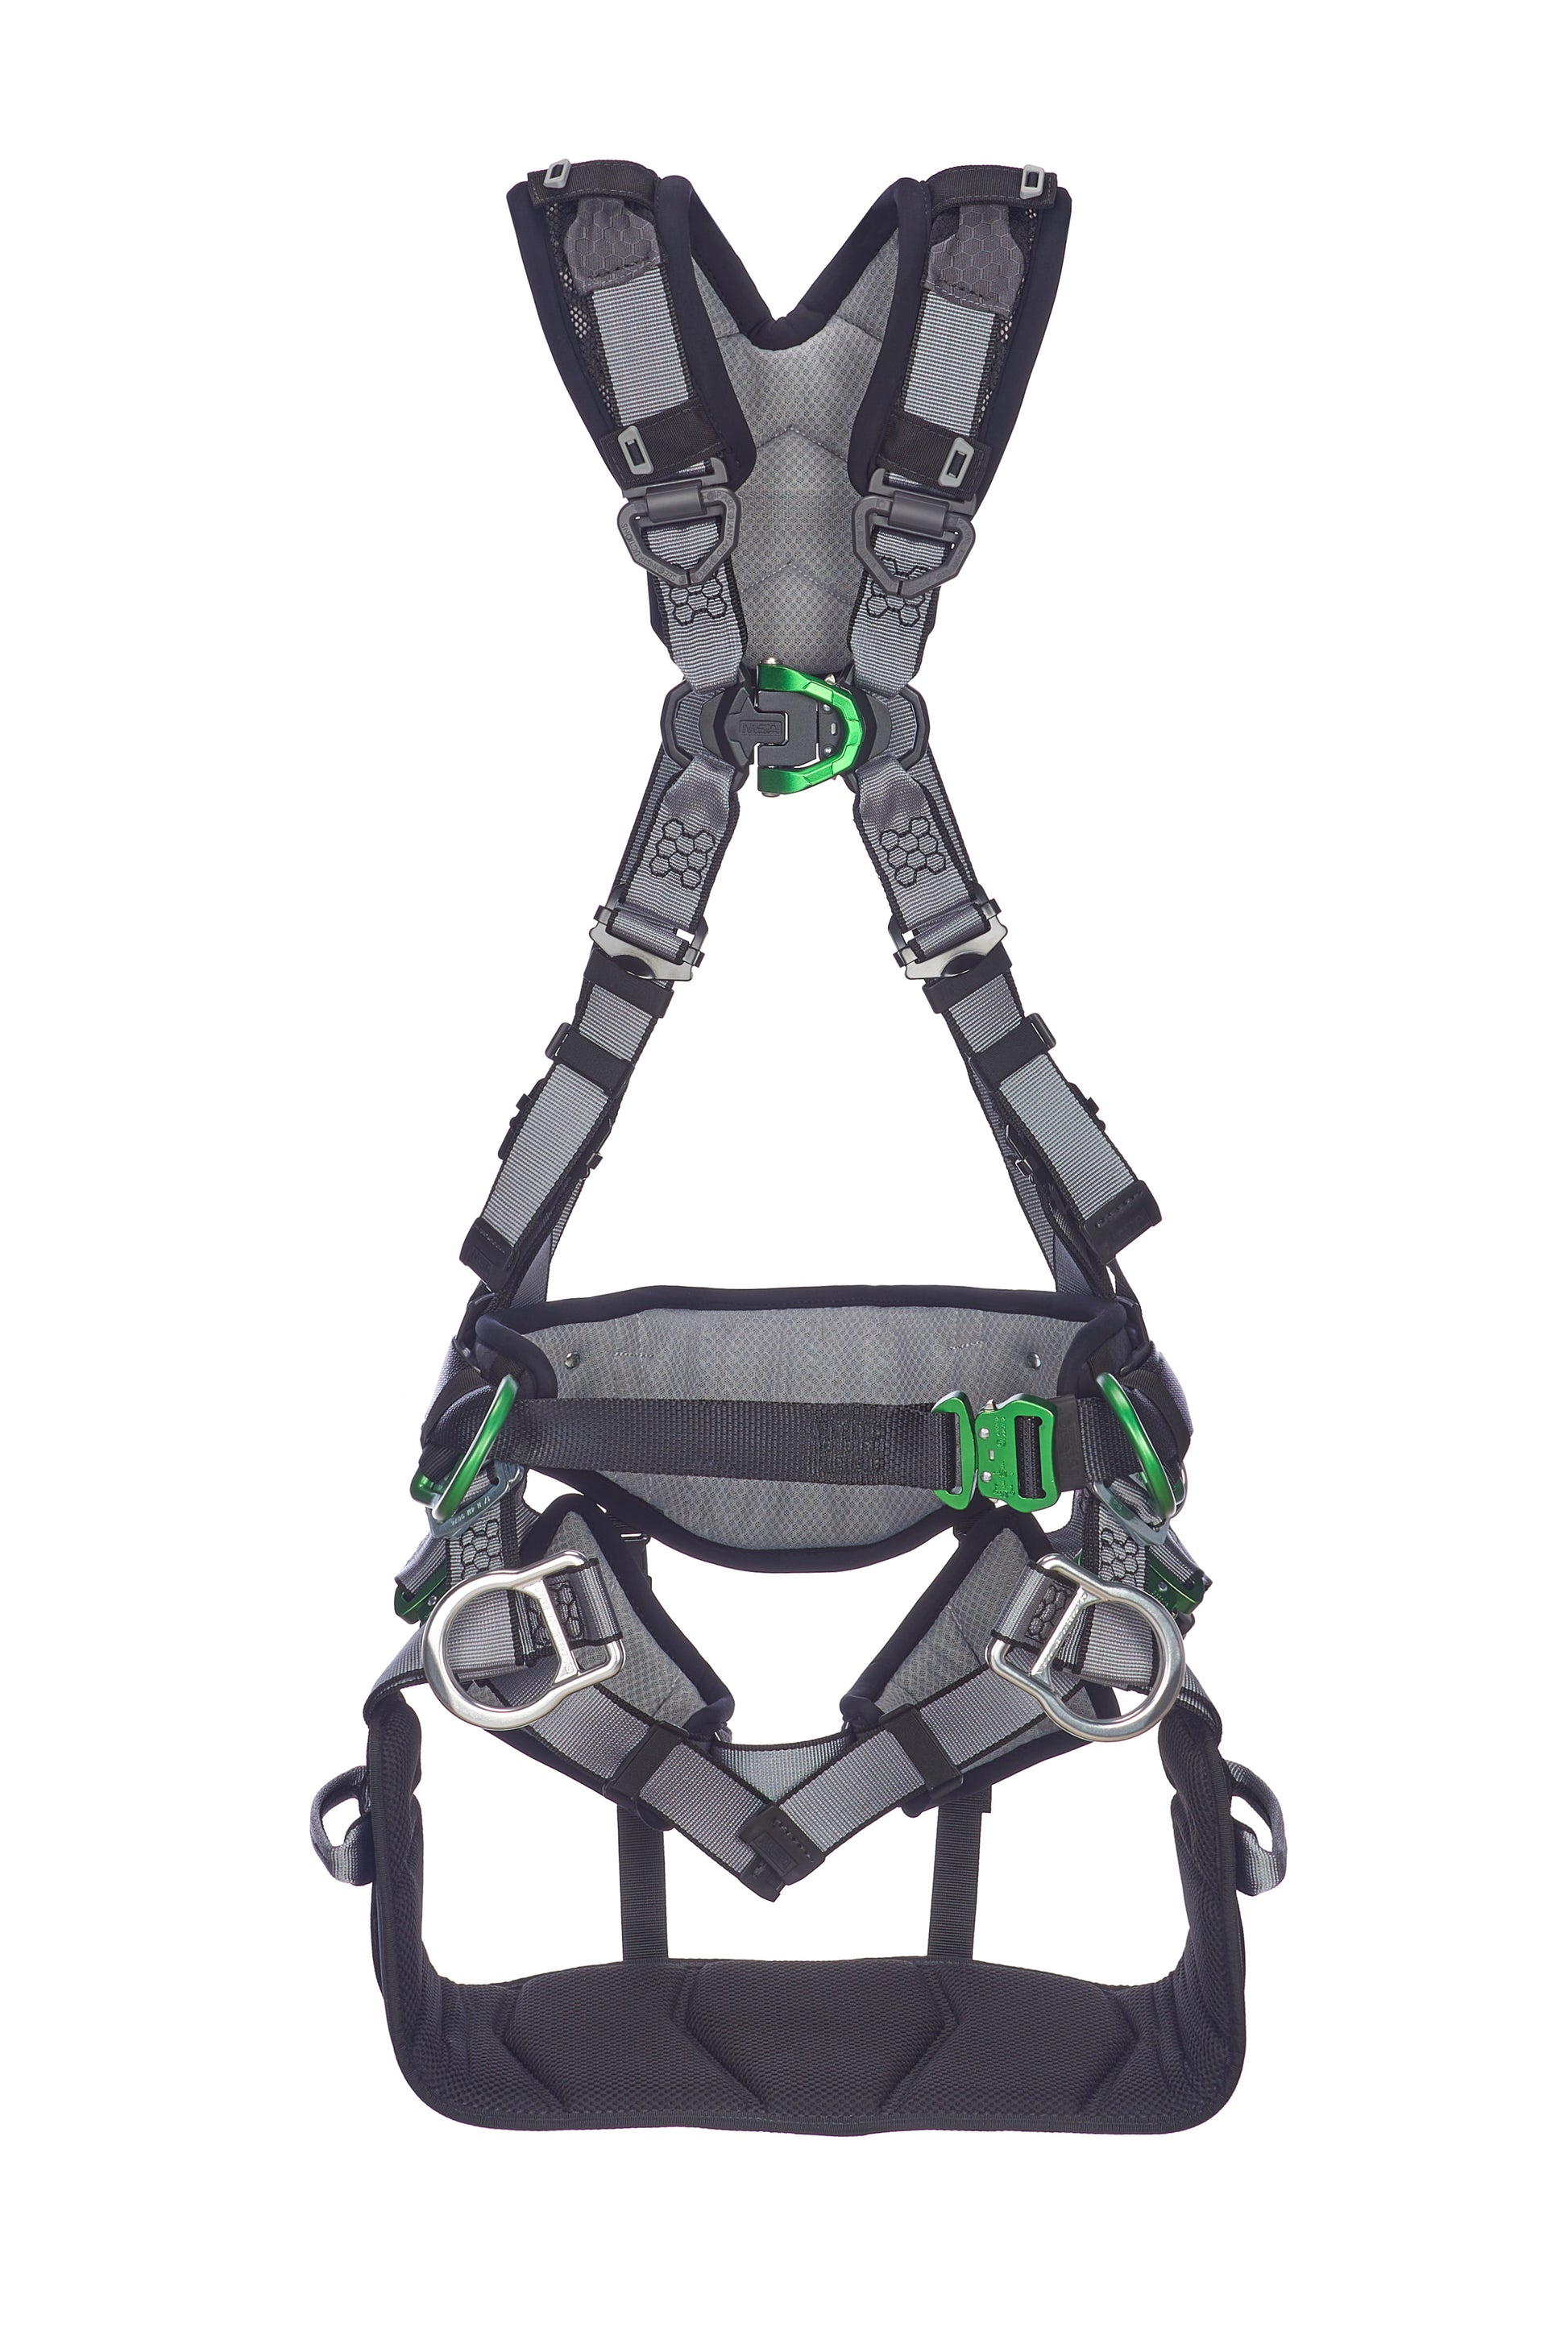 V-FIT Tower Harness, Super Extra Large,  Front-Back-Hips D-Rings, Quick-Connect Leg and Belt Straps, Shoulder-Leg Padding